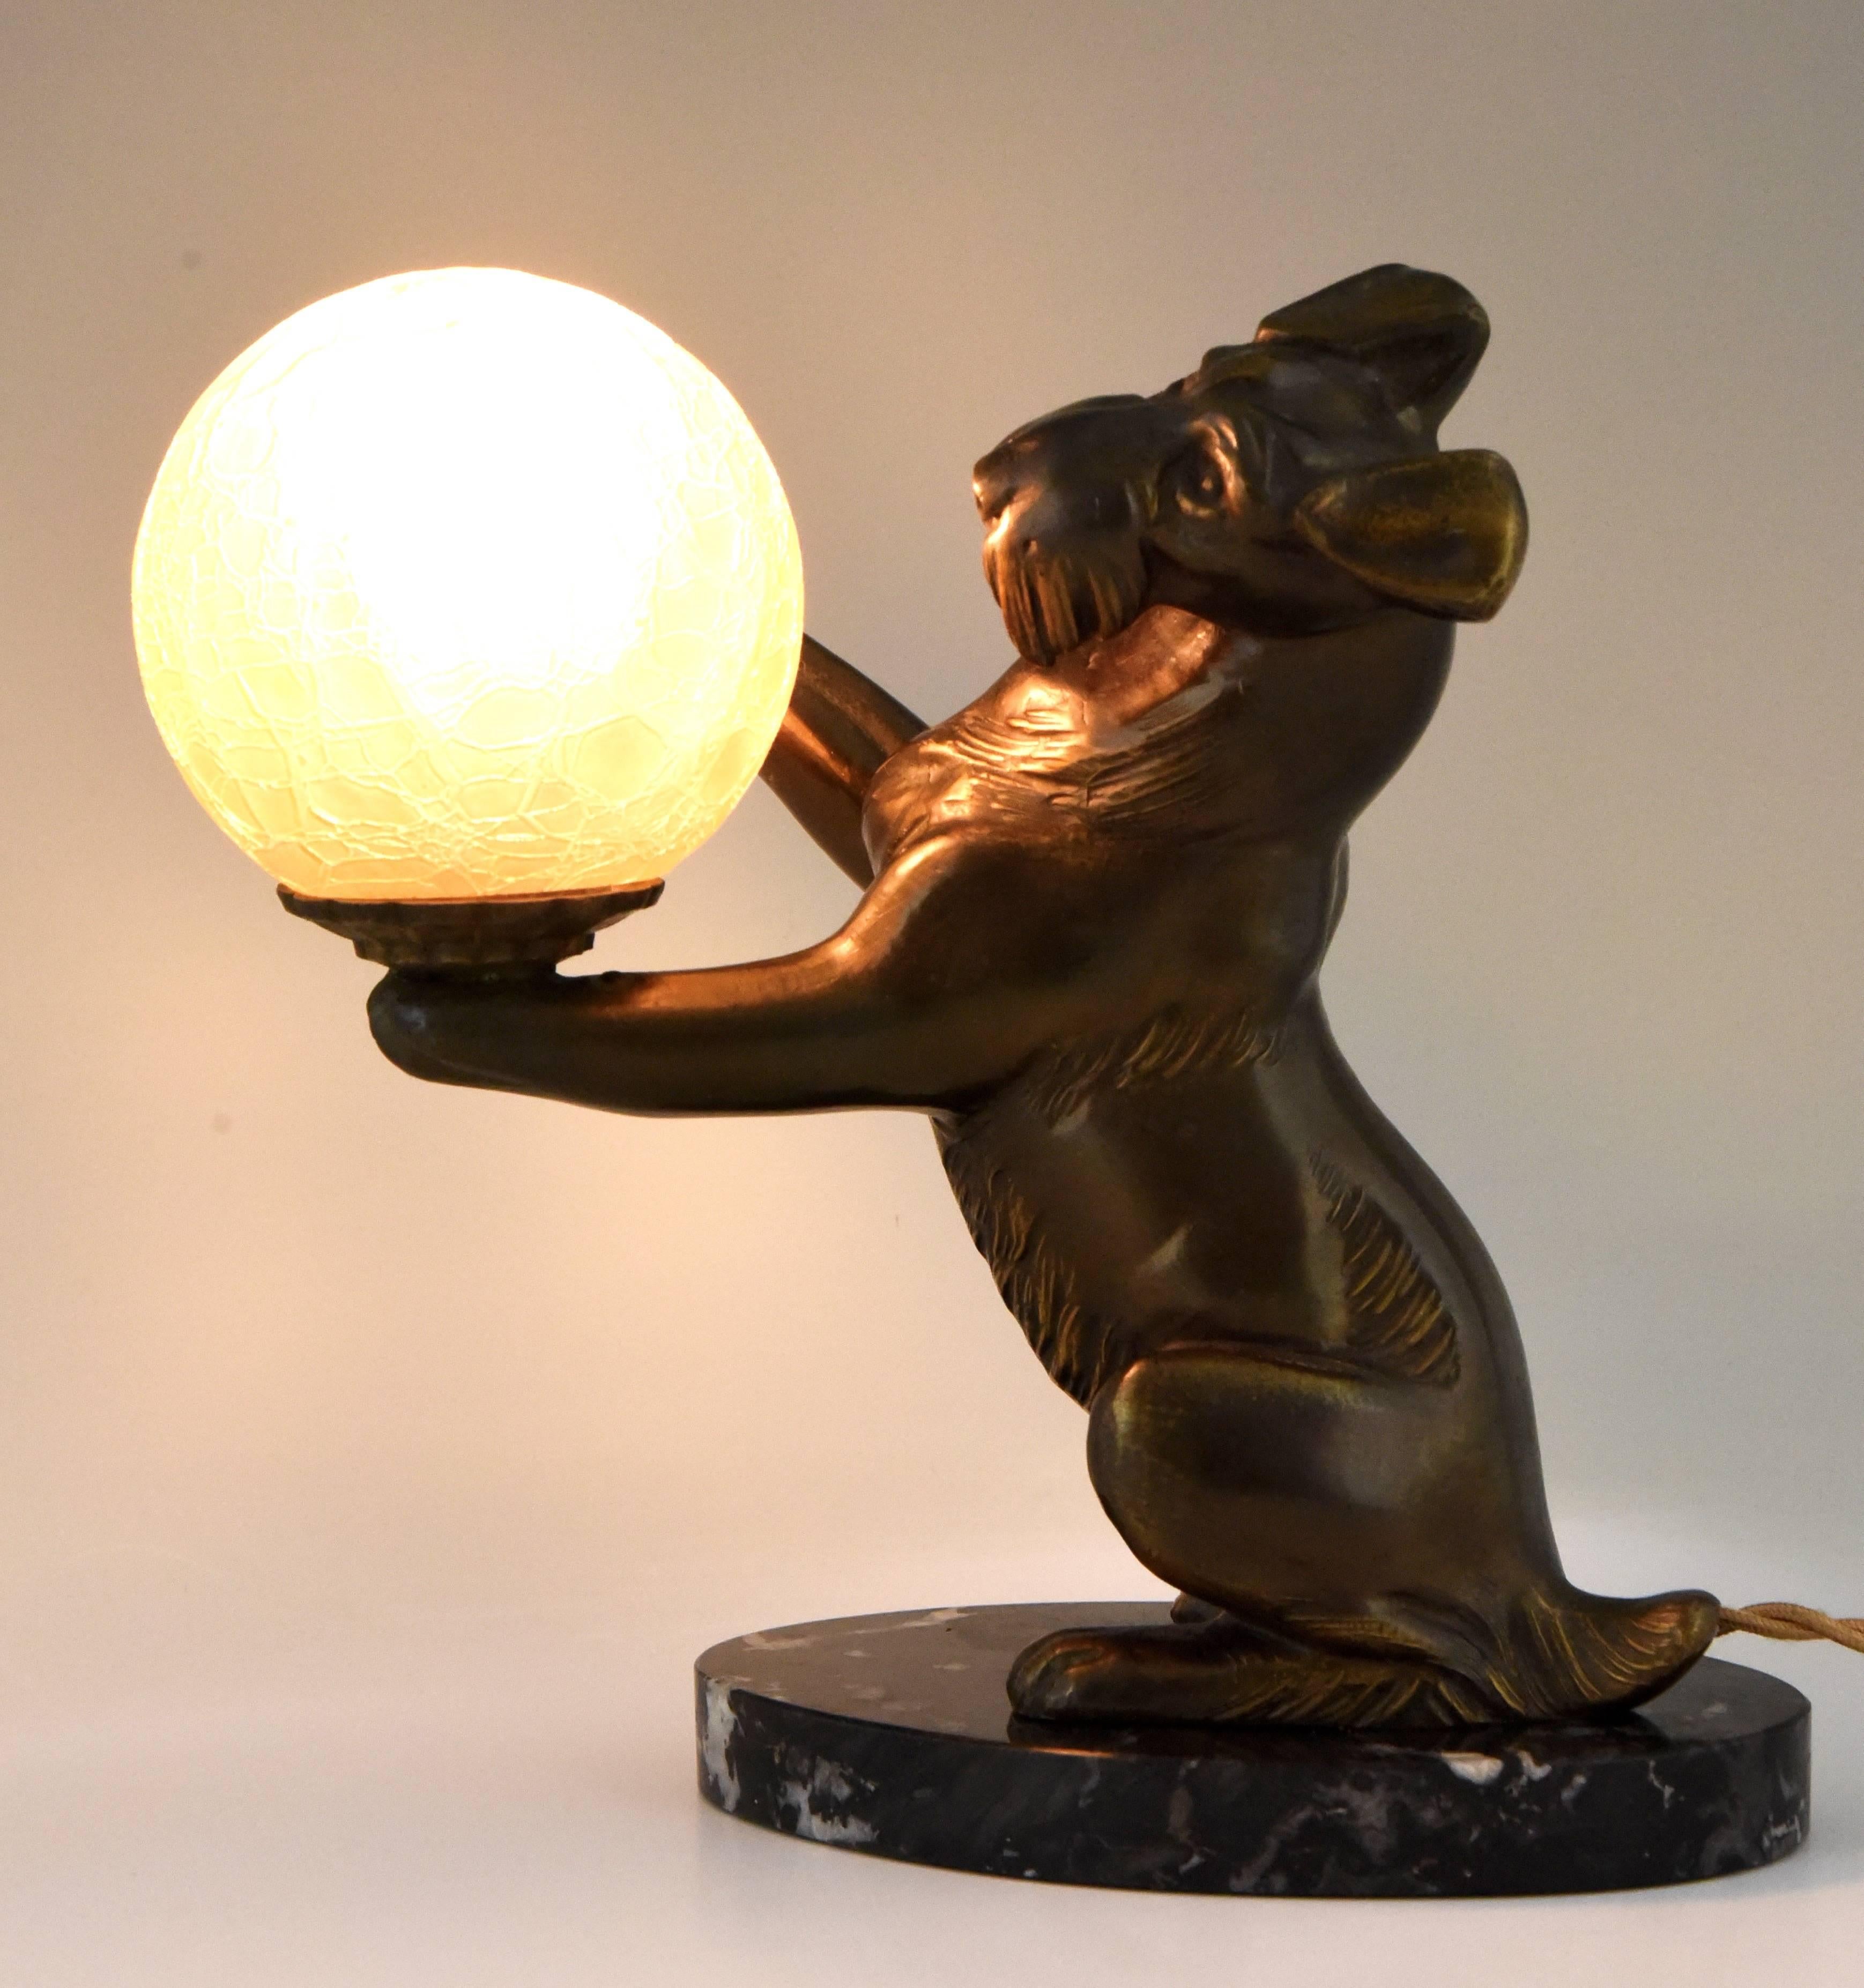 Description: Art Deco lamp with fox terrier dog holding a crackle glass globe.
Artist / Maker: Irenée Rochard.
Signature / Marks: Rochard.
Style: Art Deco.
Date: 1930.
Material: Patinated Art metal? Crackle glass globe.? Marble base.
Origin: